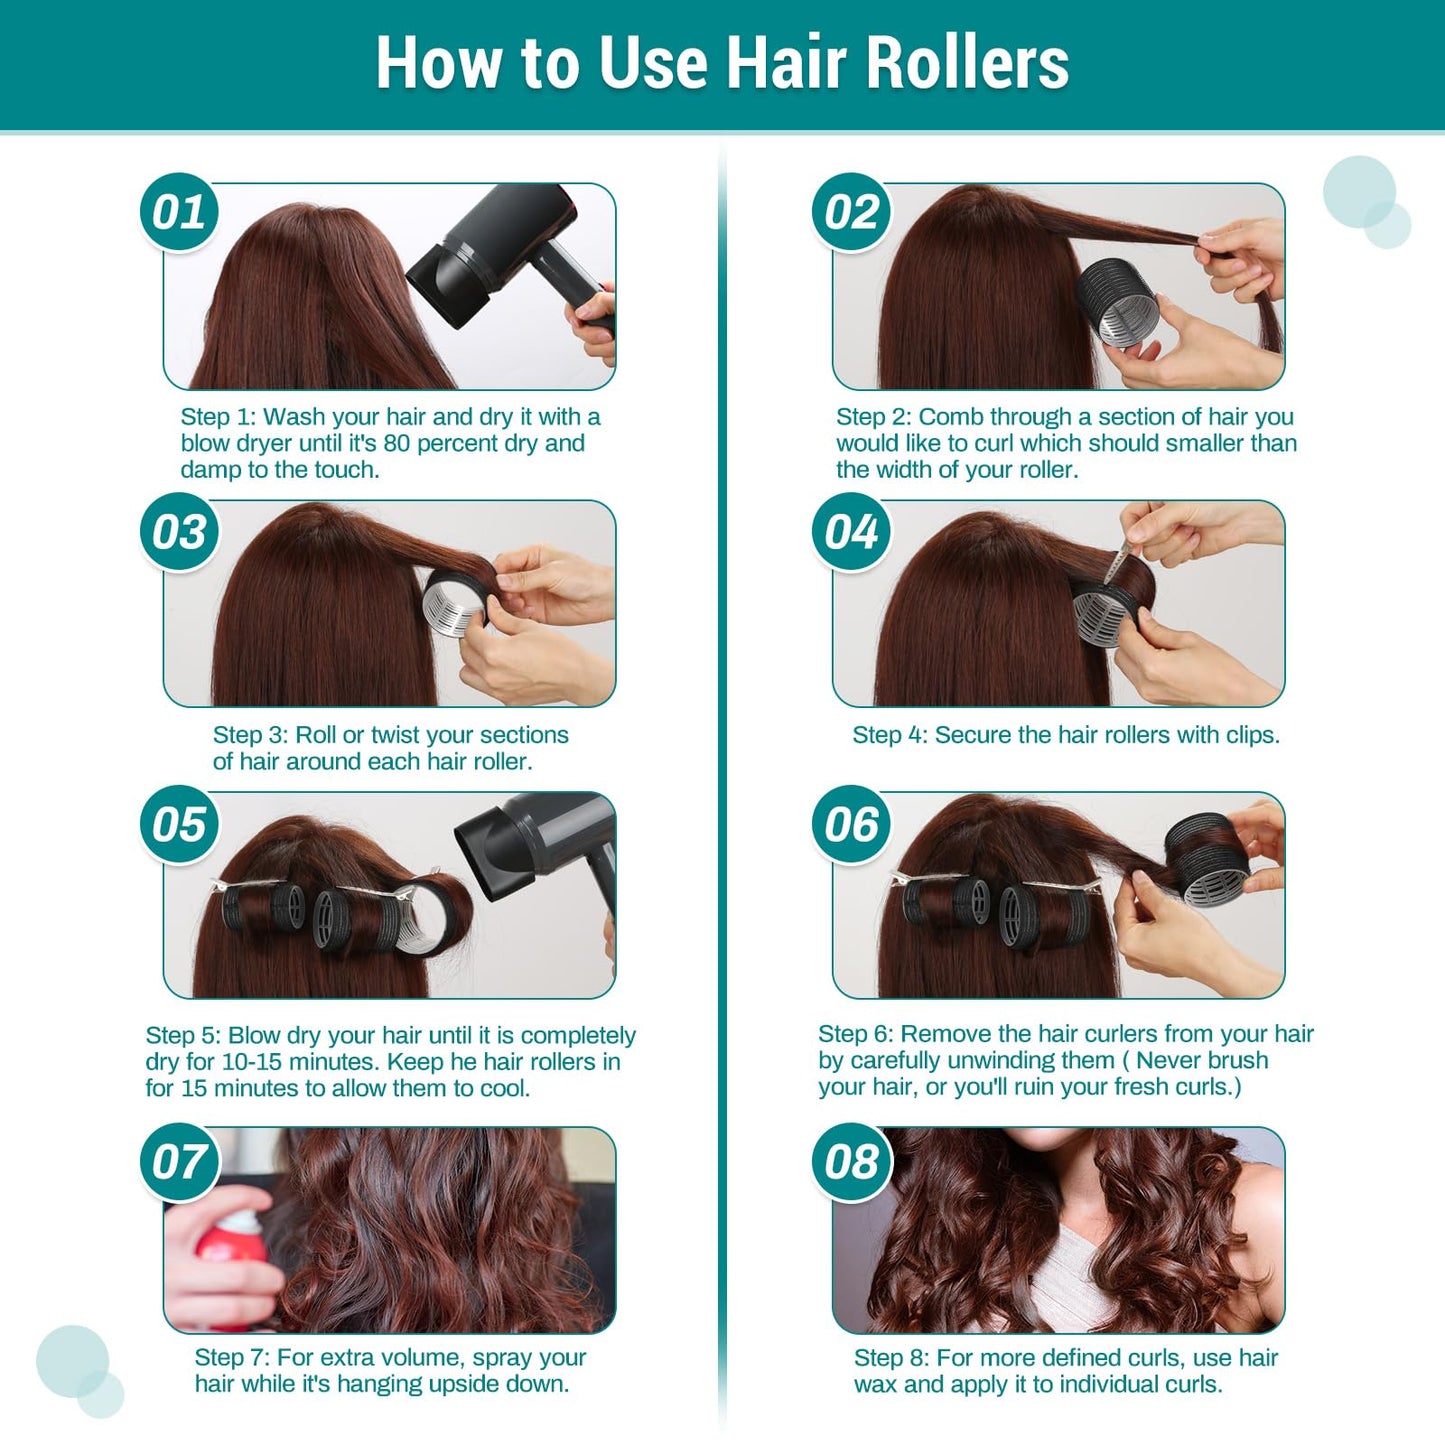 Hair Rollers for Blowout Look Long Hair, Rollers Hair Curlers 38 Pcs Self Grip Hair Rollers Set with 24Pcs Hair Rollers 4 Sizes and 12 Pcs Hair Clips, Comb and Storage Bag for Hair Volume (Black)